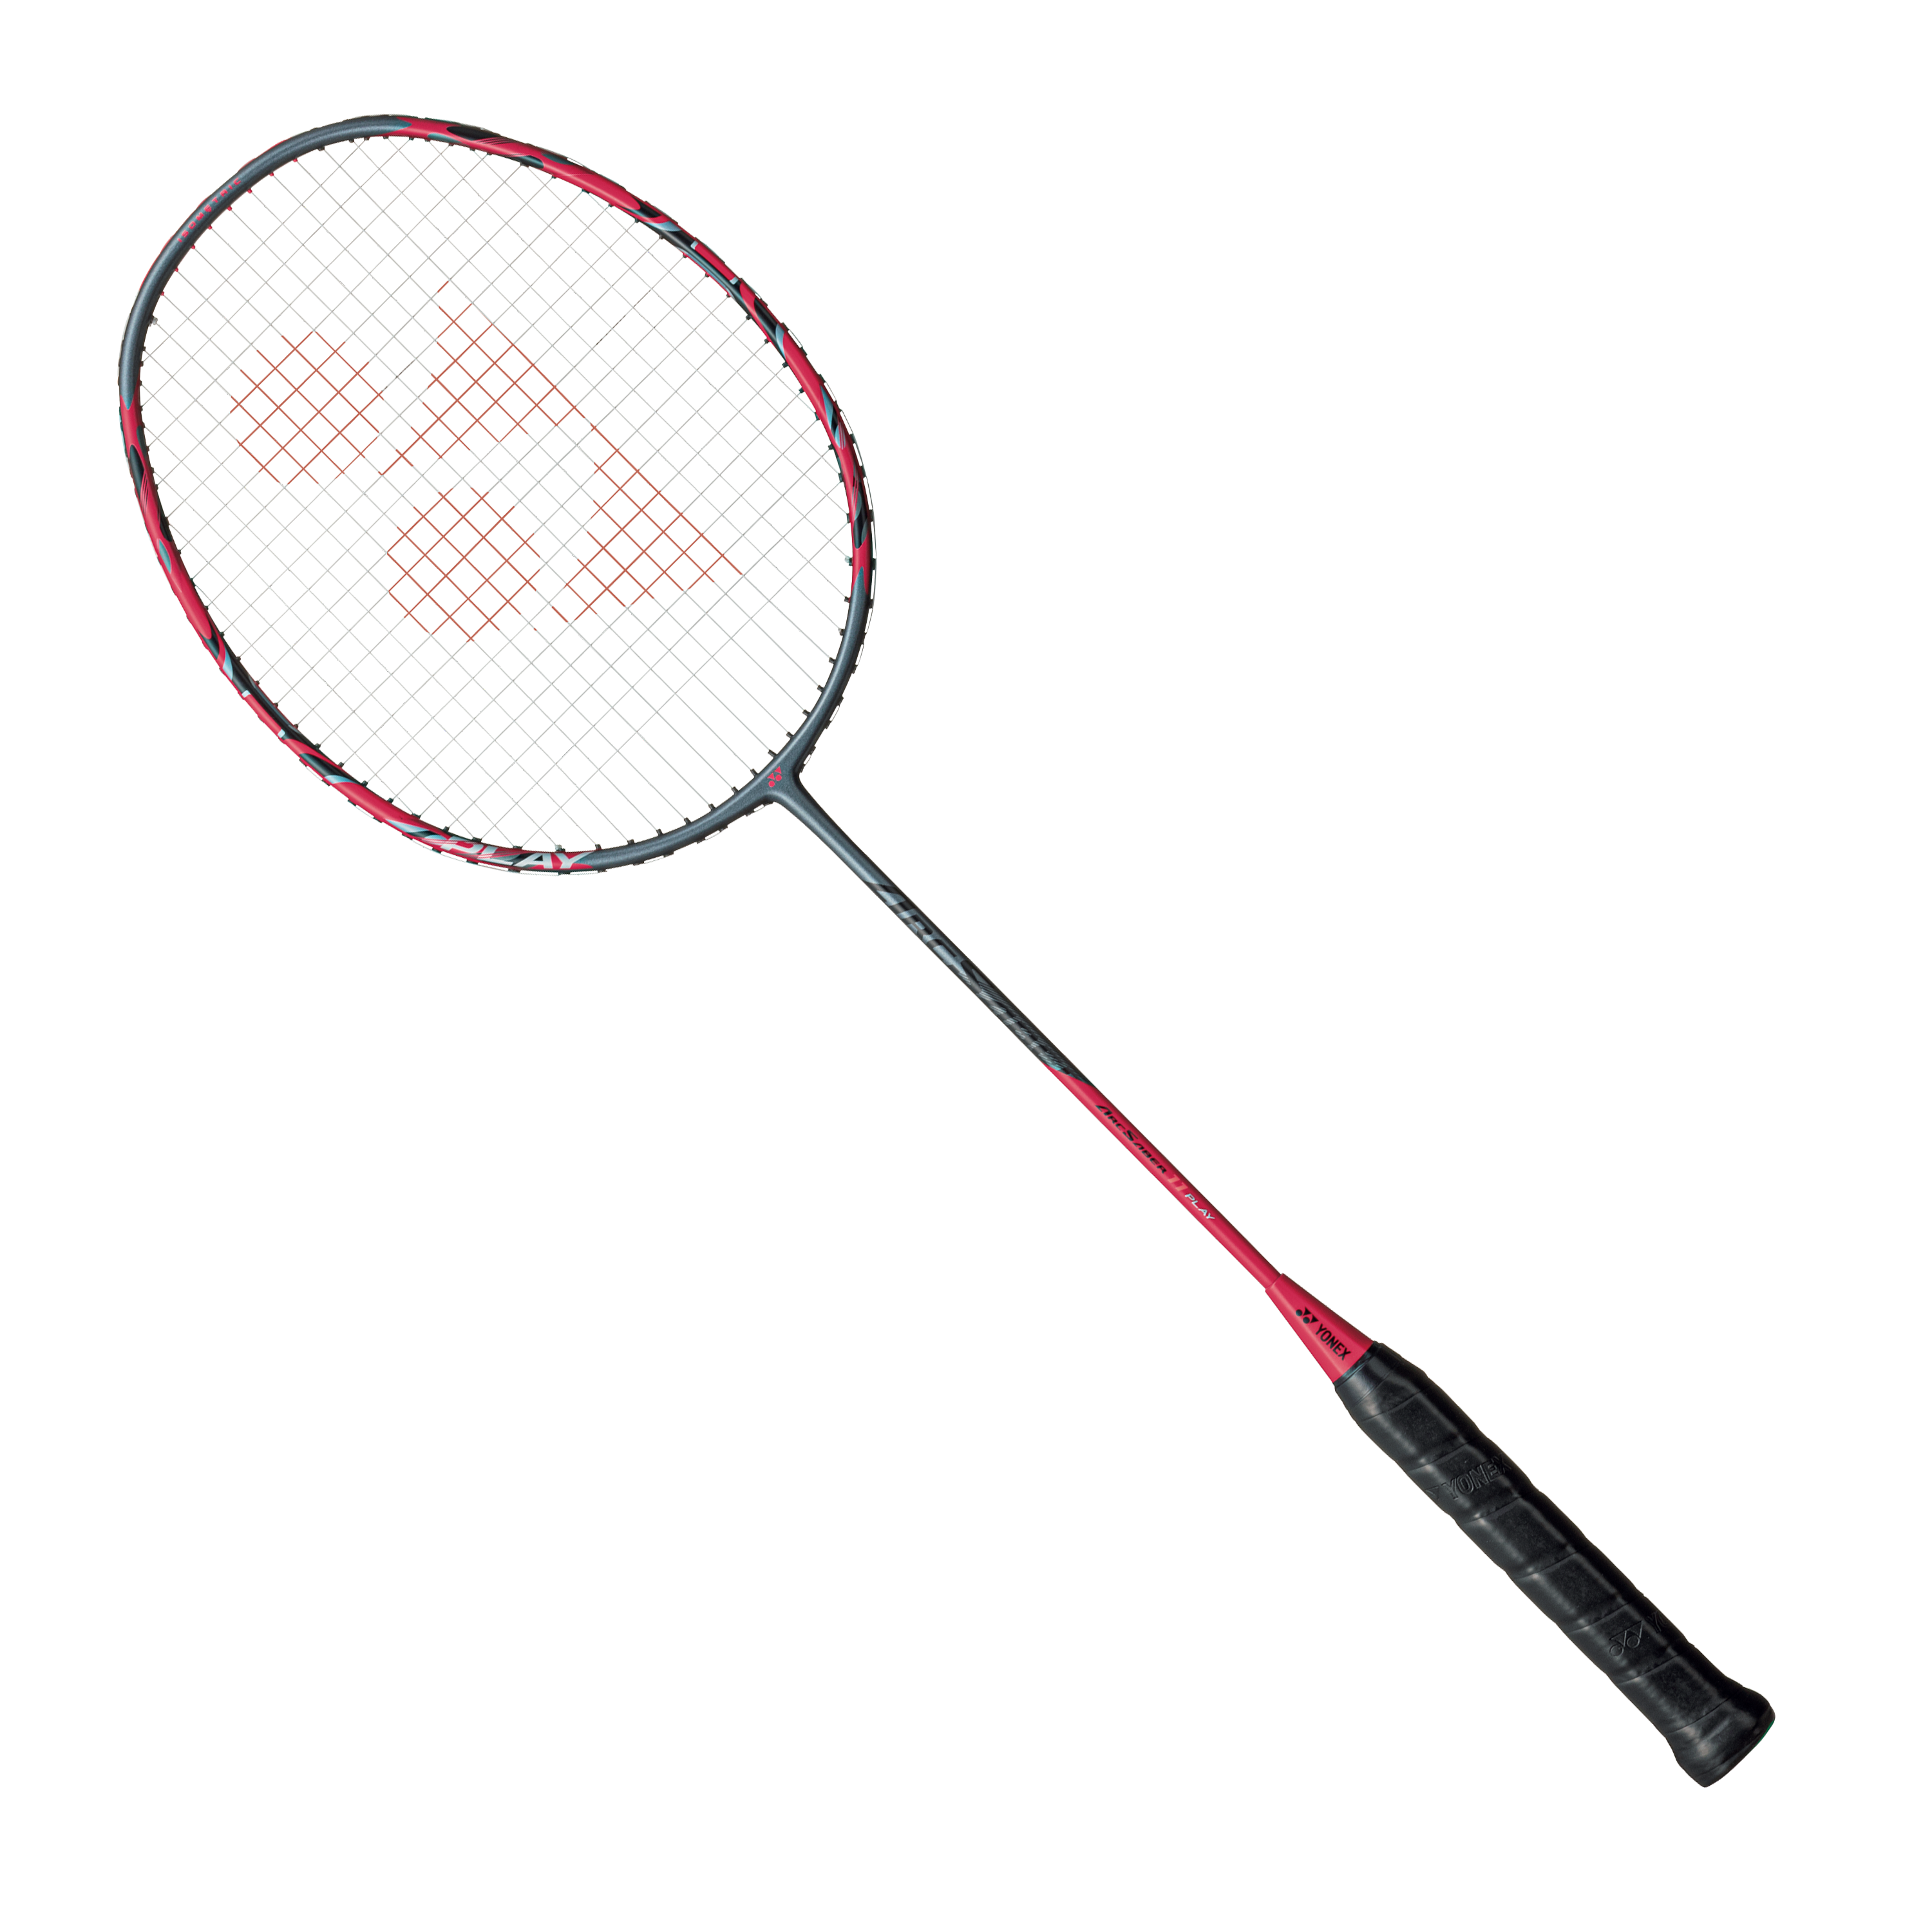 Yonex Arcsaber 11 Play Balanced Badminton Racquet 4U(83g)G6 (Ready to Go)